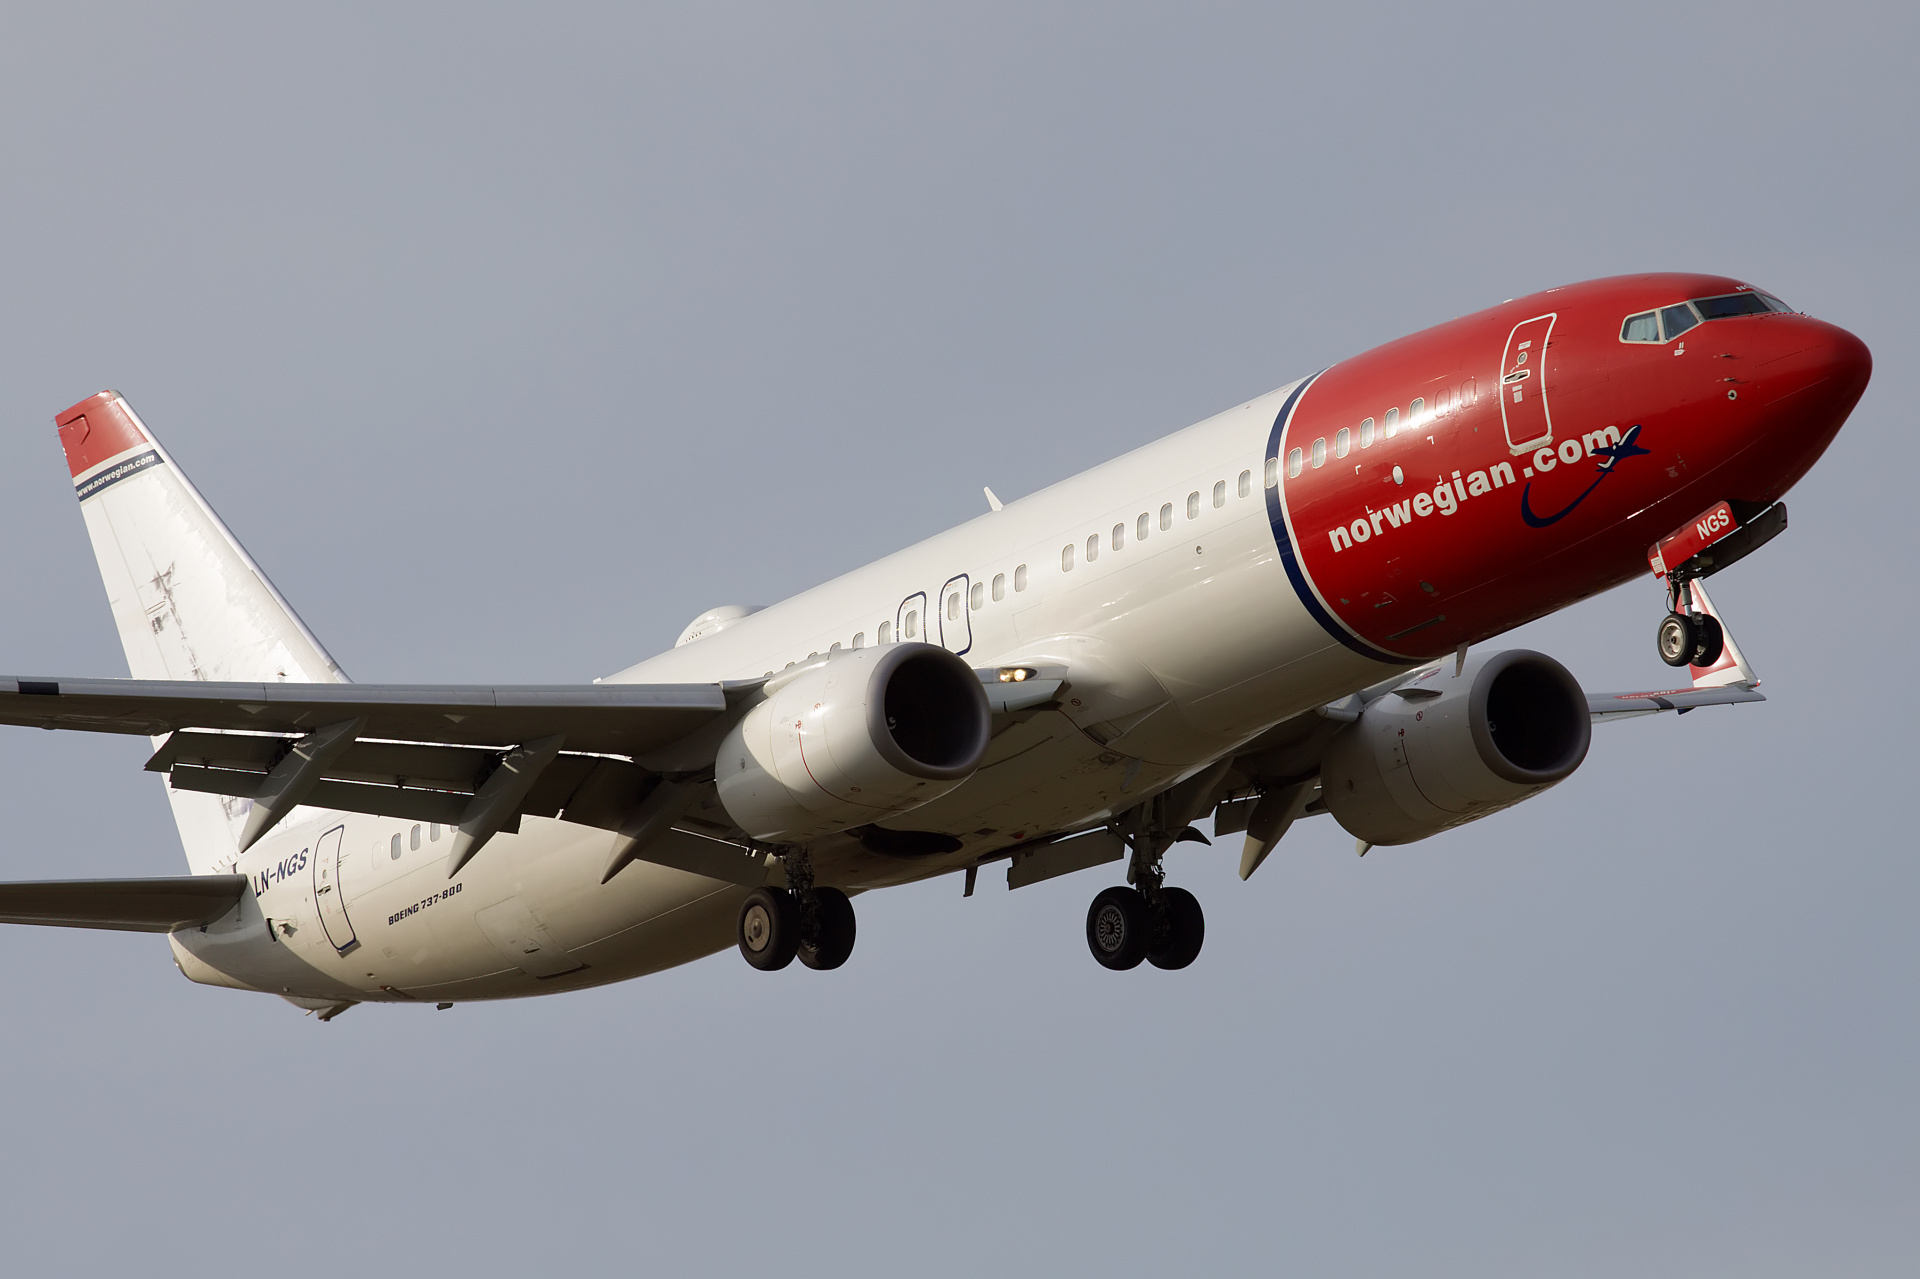 LN-NGS, Norwegian Air Shuttle (Aircraft » EPWA Spotting » Boeing 737-800 » Norwegian Air)